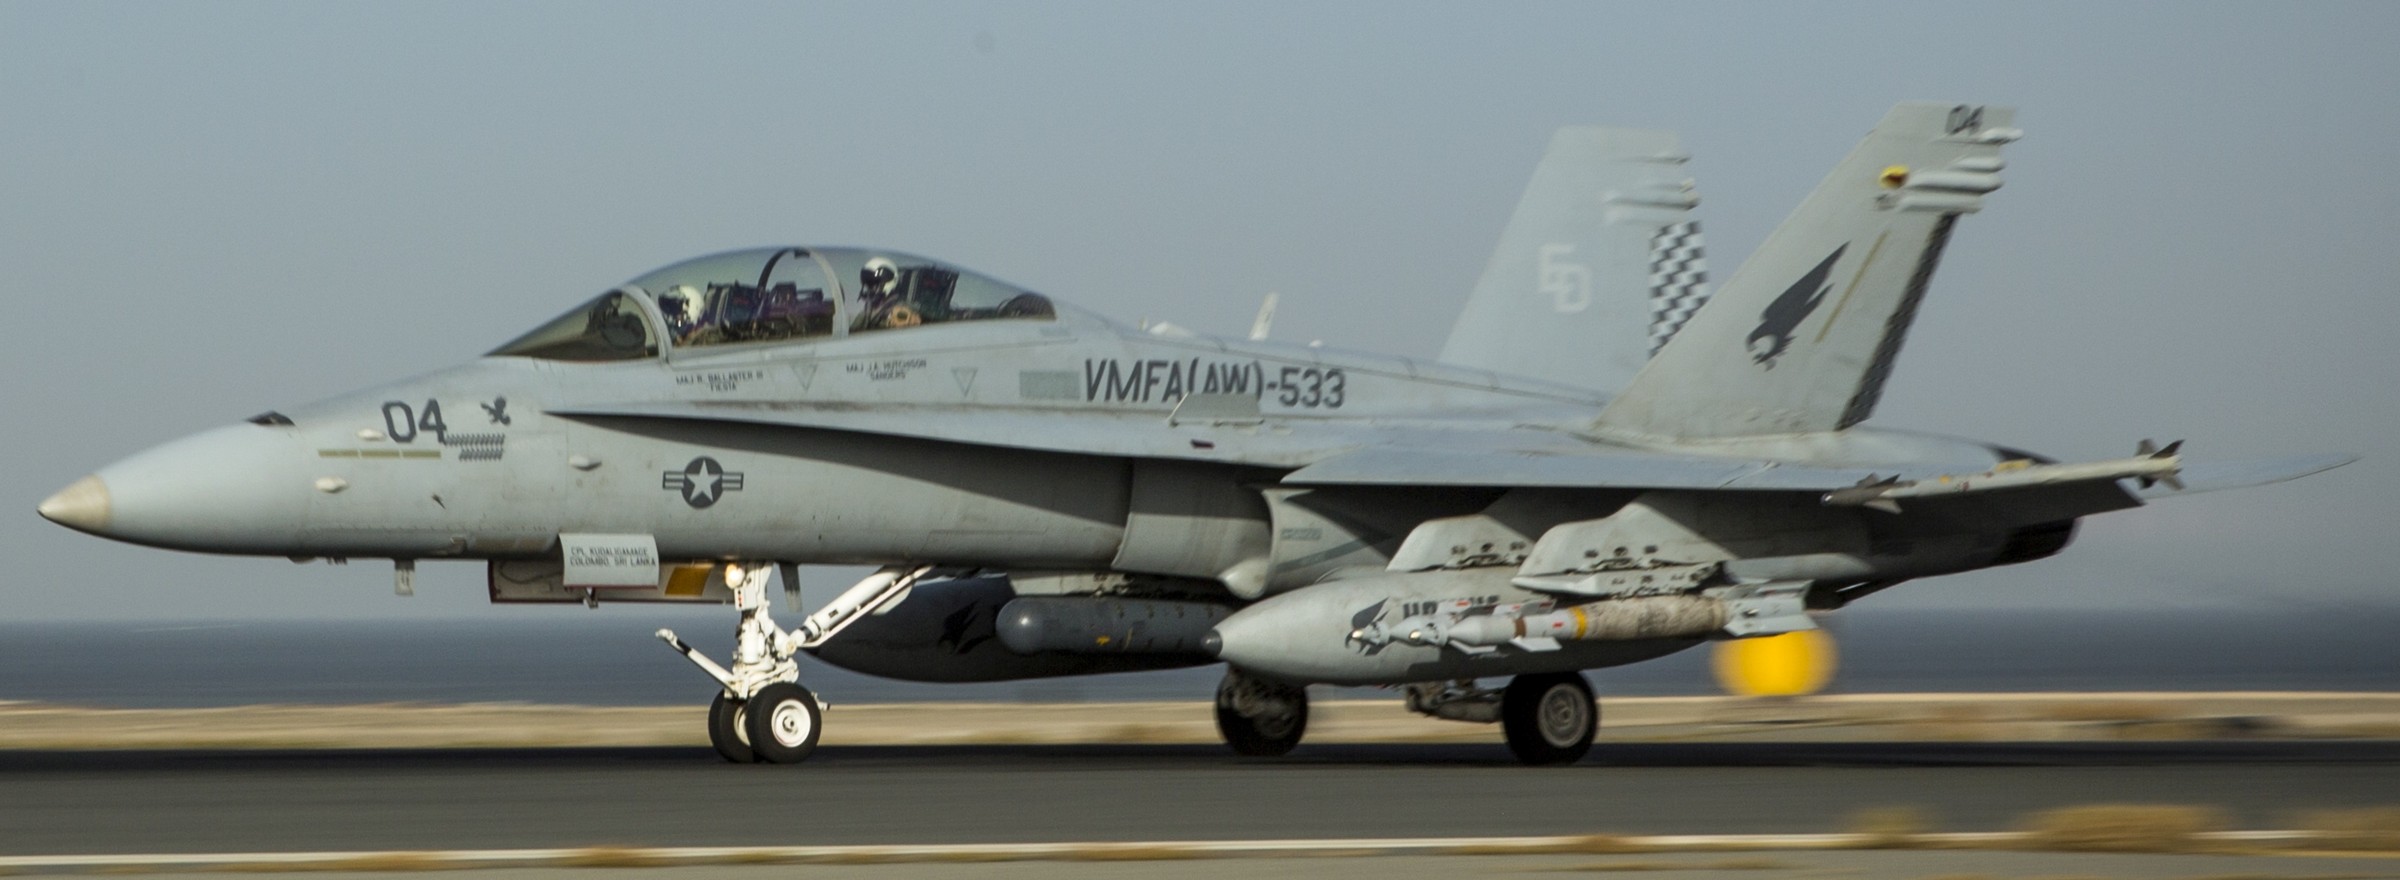 vmfa(aw)-533 hawks marine fighter attack squadron usmc f/a-18d hornet 32